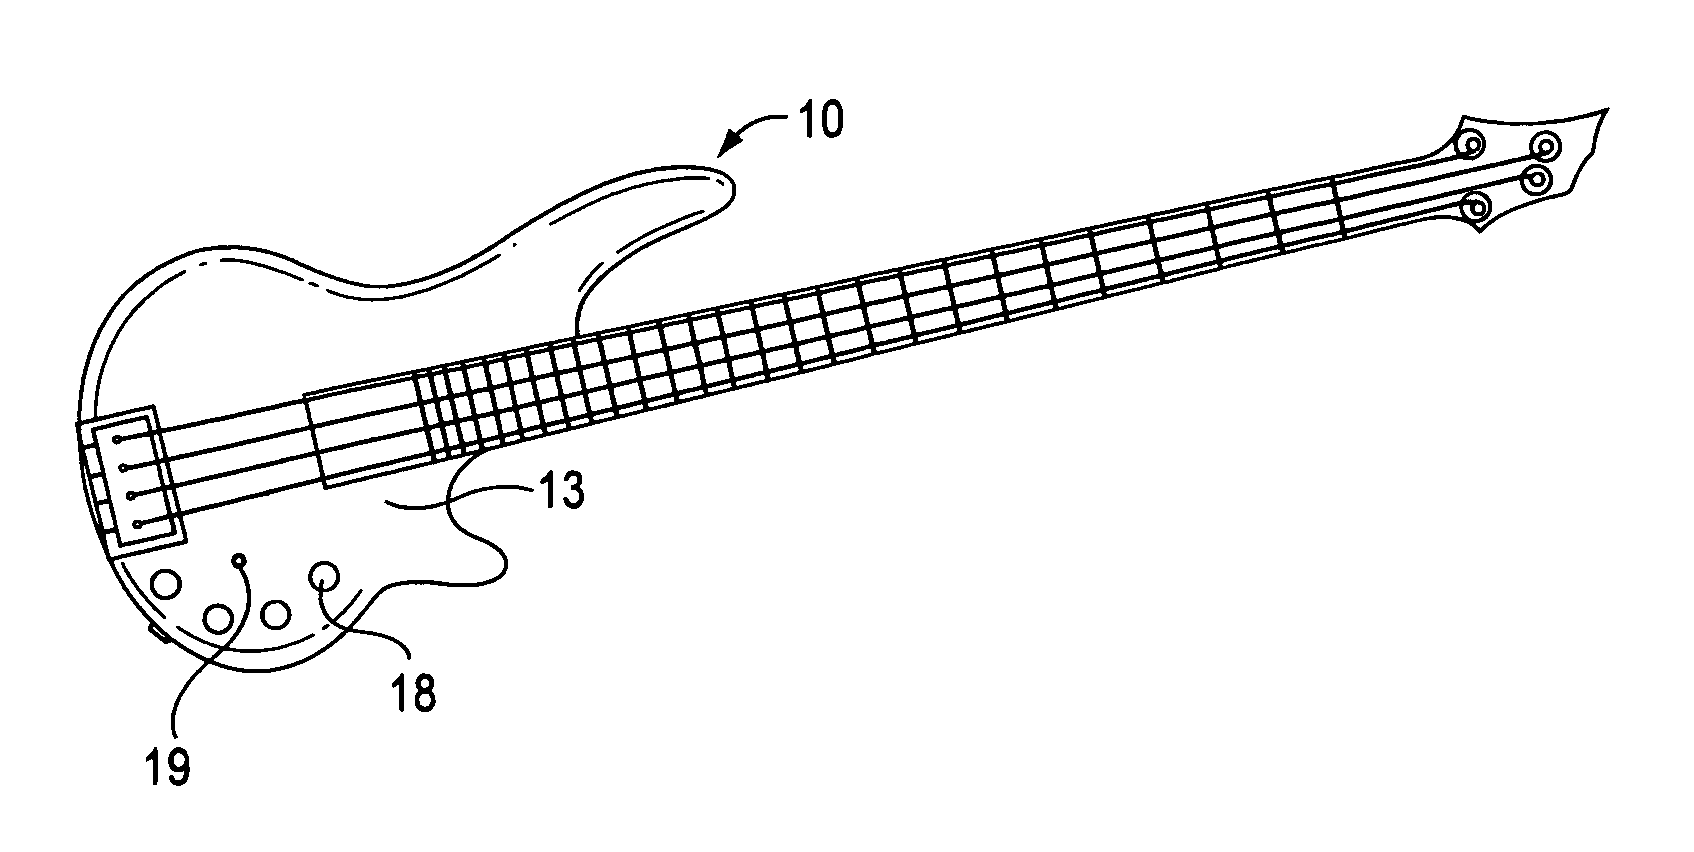 Interchangable pre amp module for an electronic string instrument